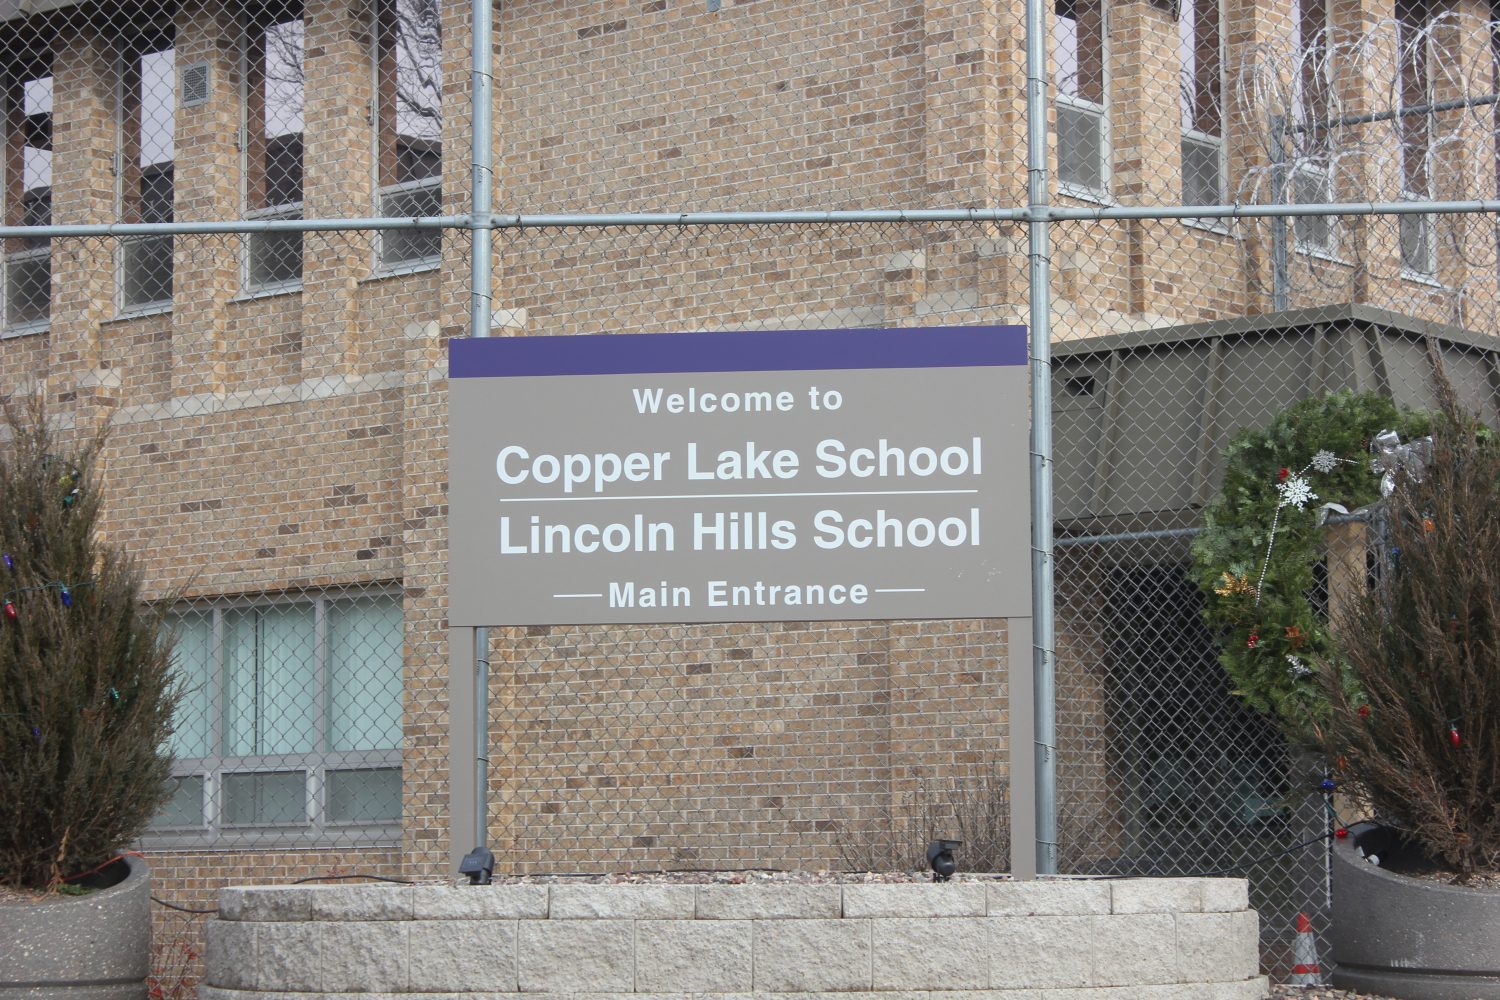 Latest Monitor’s Report notes continued progress at Lincoln Hills School/Copper Lake School